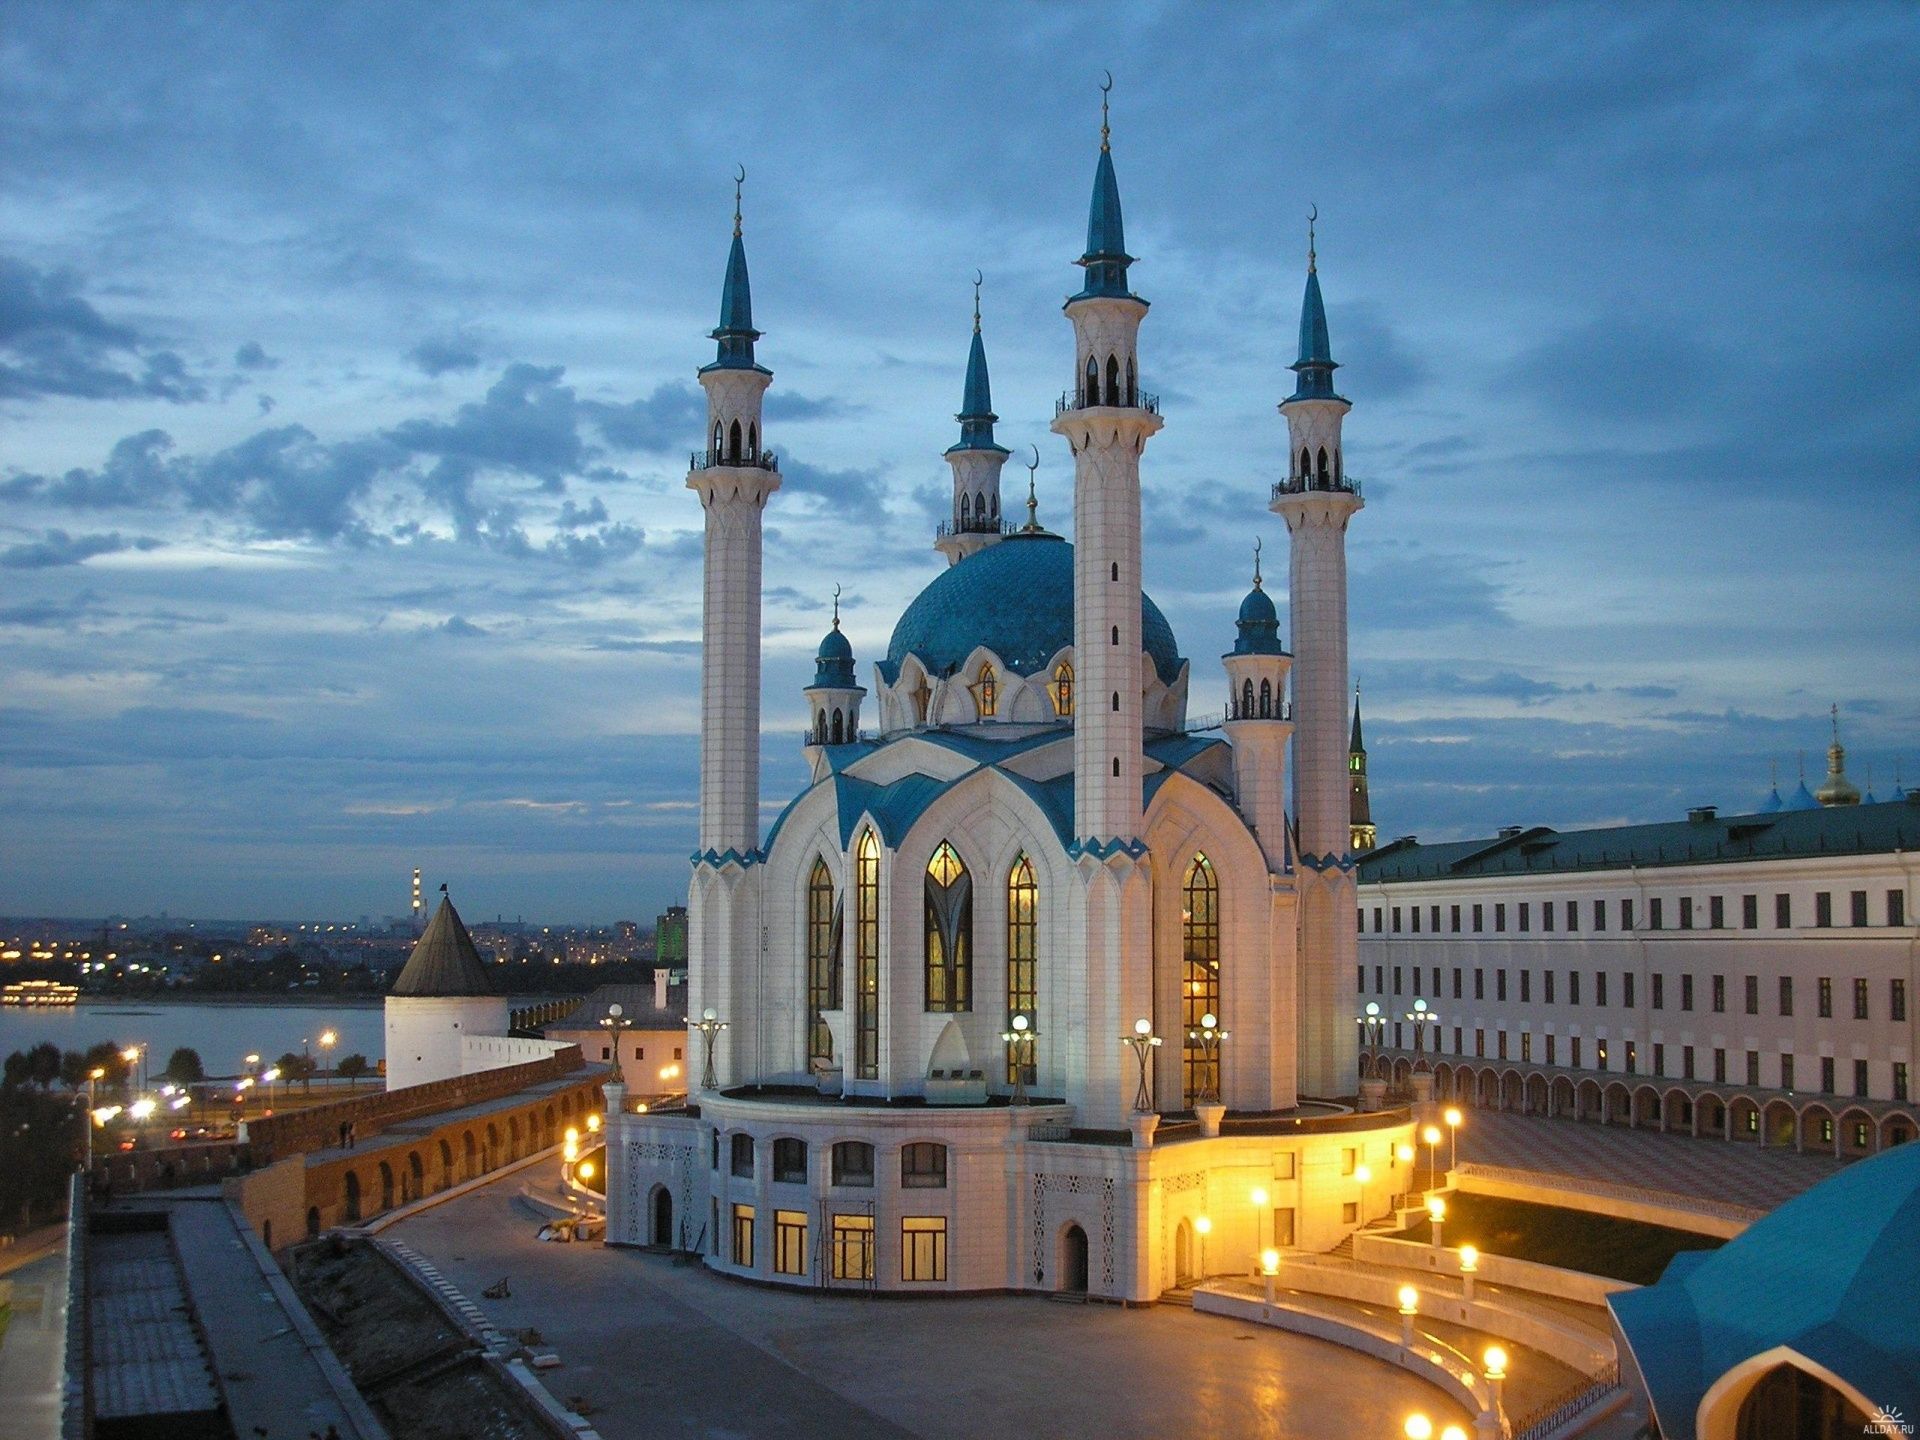 Kul Sharif Mosque in Kazan - Russia | Mosques | Pinterest | Mosque